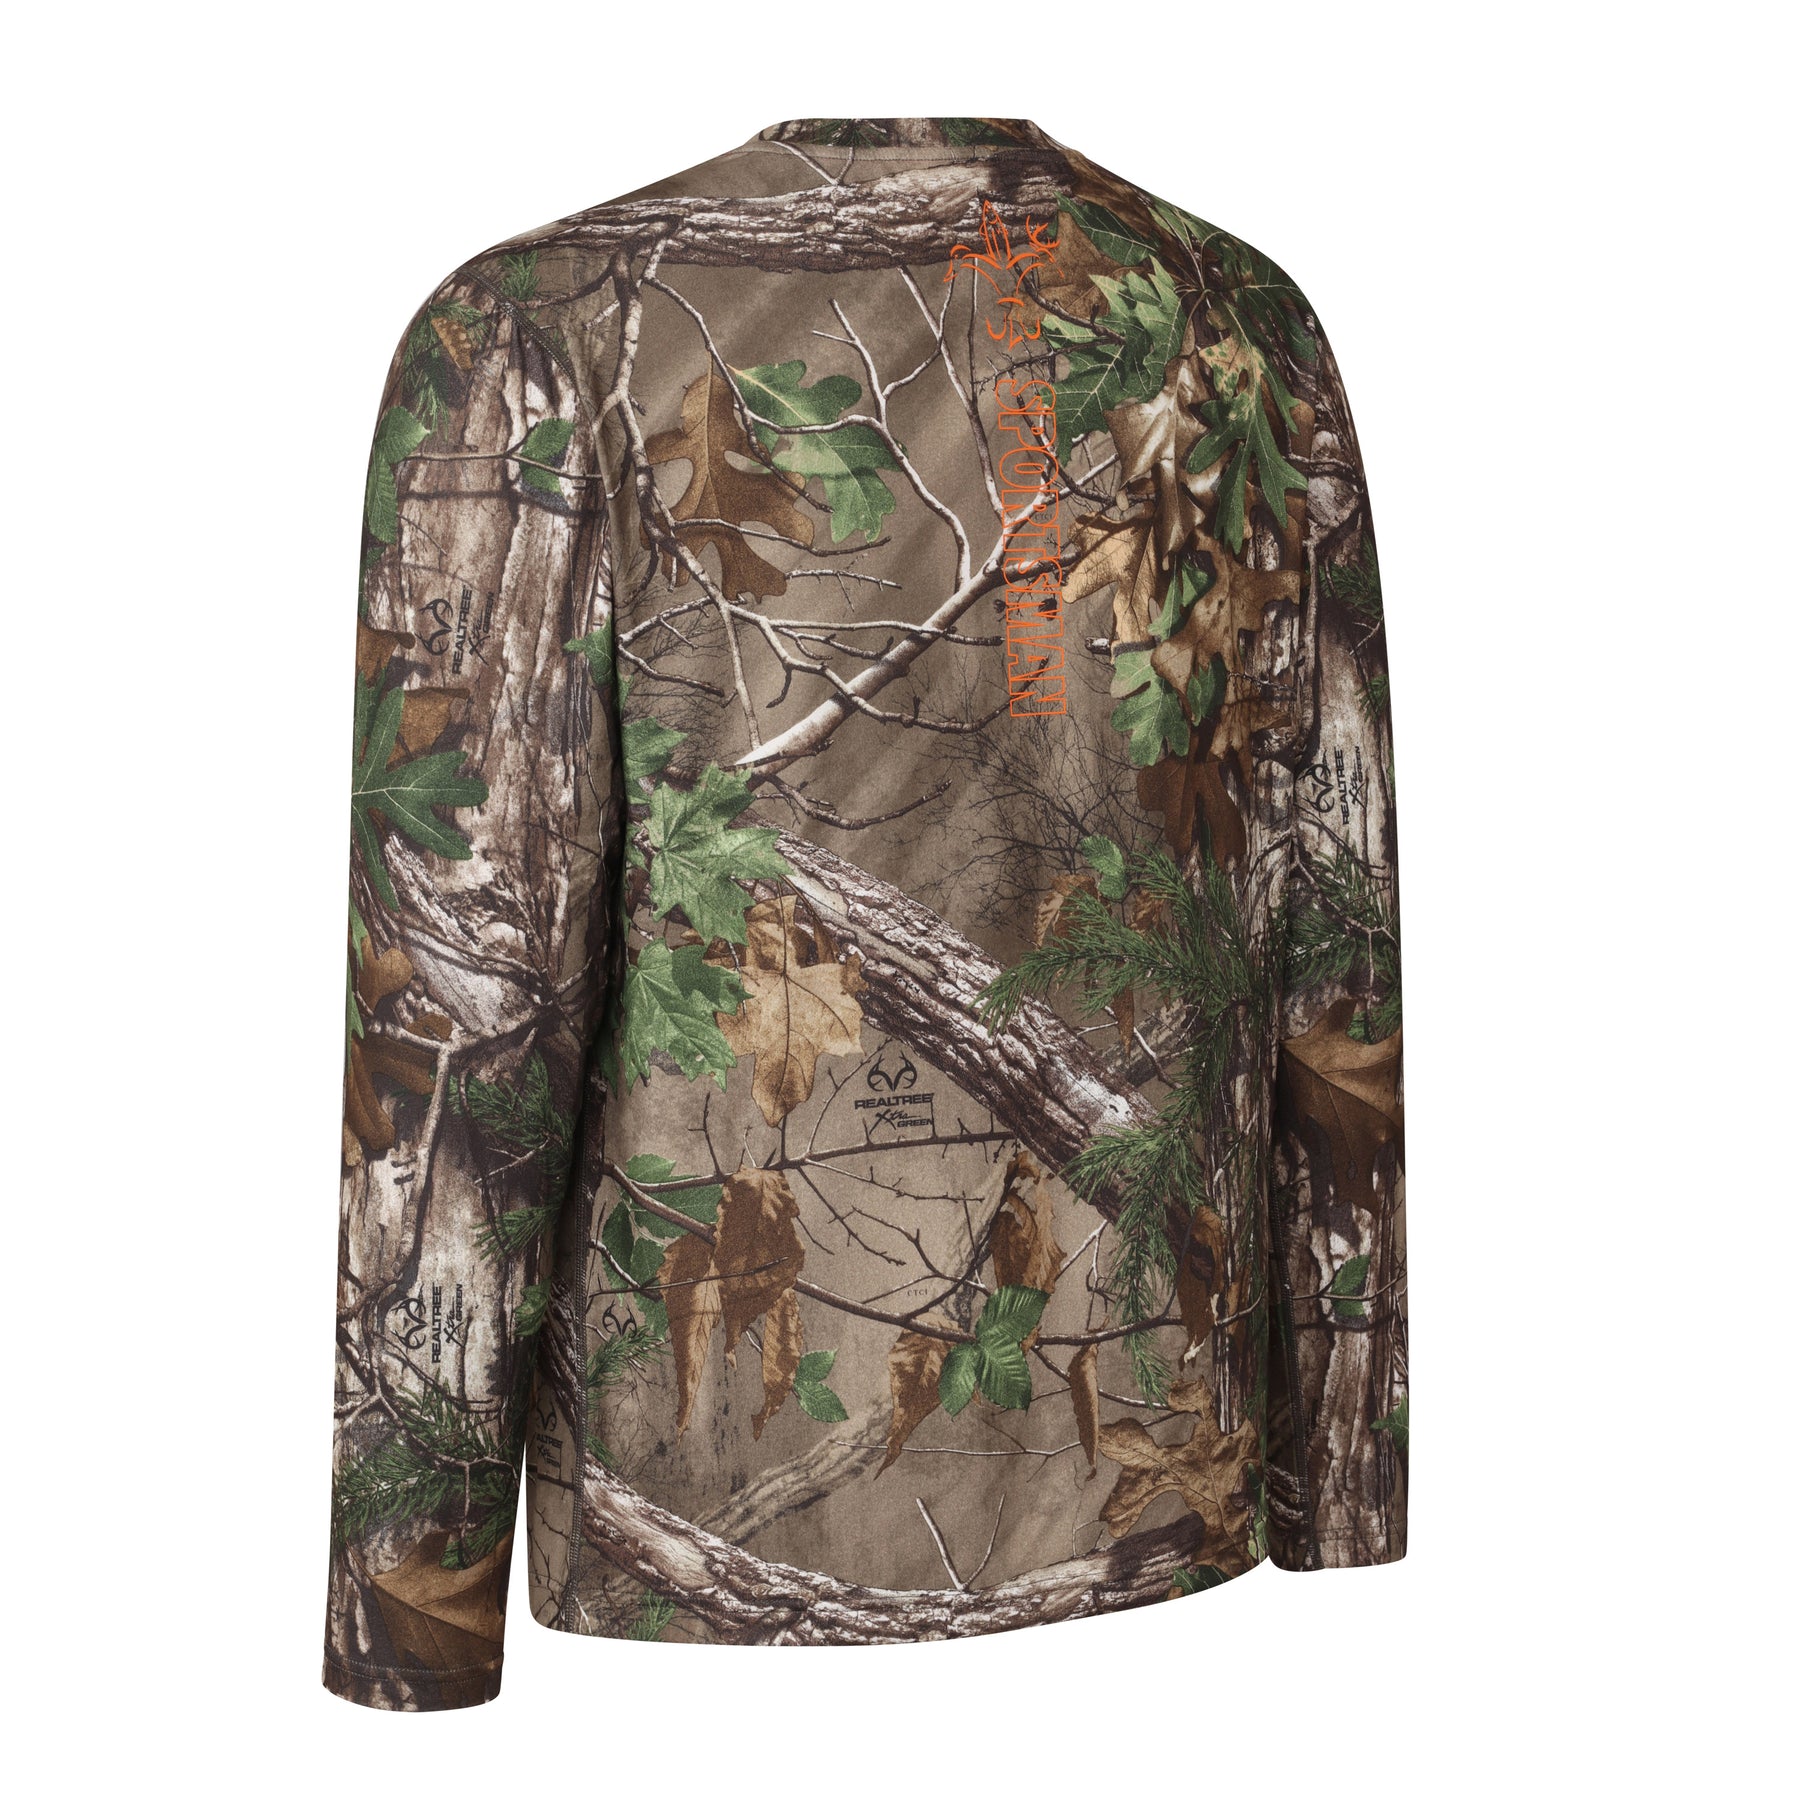 Sportsman Responder Xtra Green Camo Shirt, Long Sleeve Base Layer - woods deer hunting